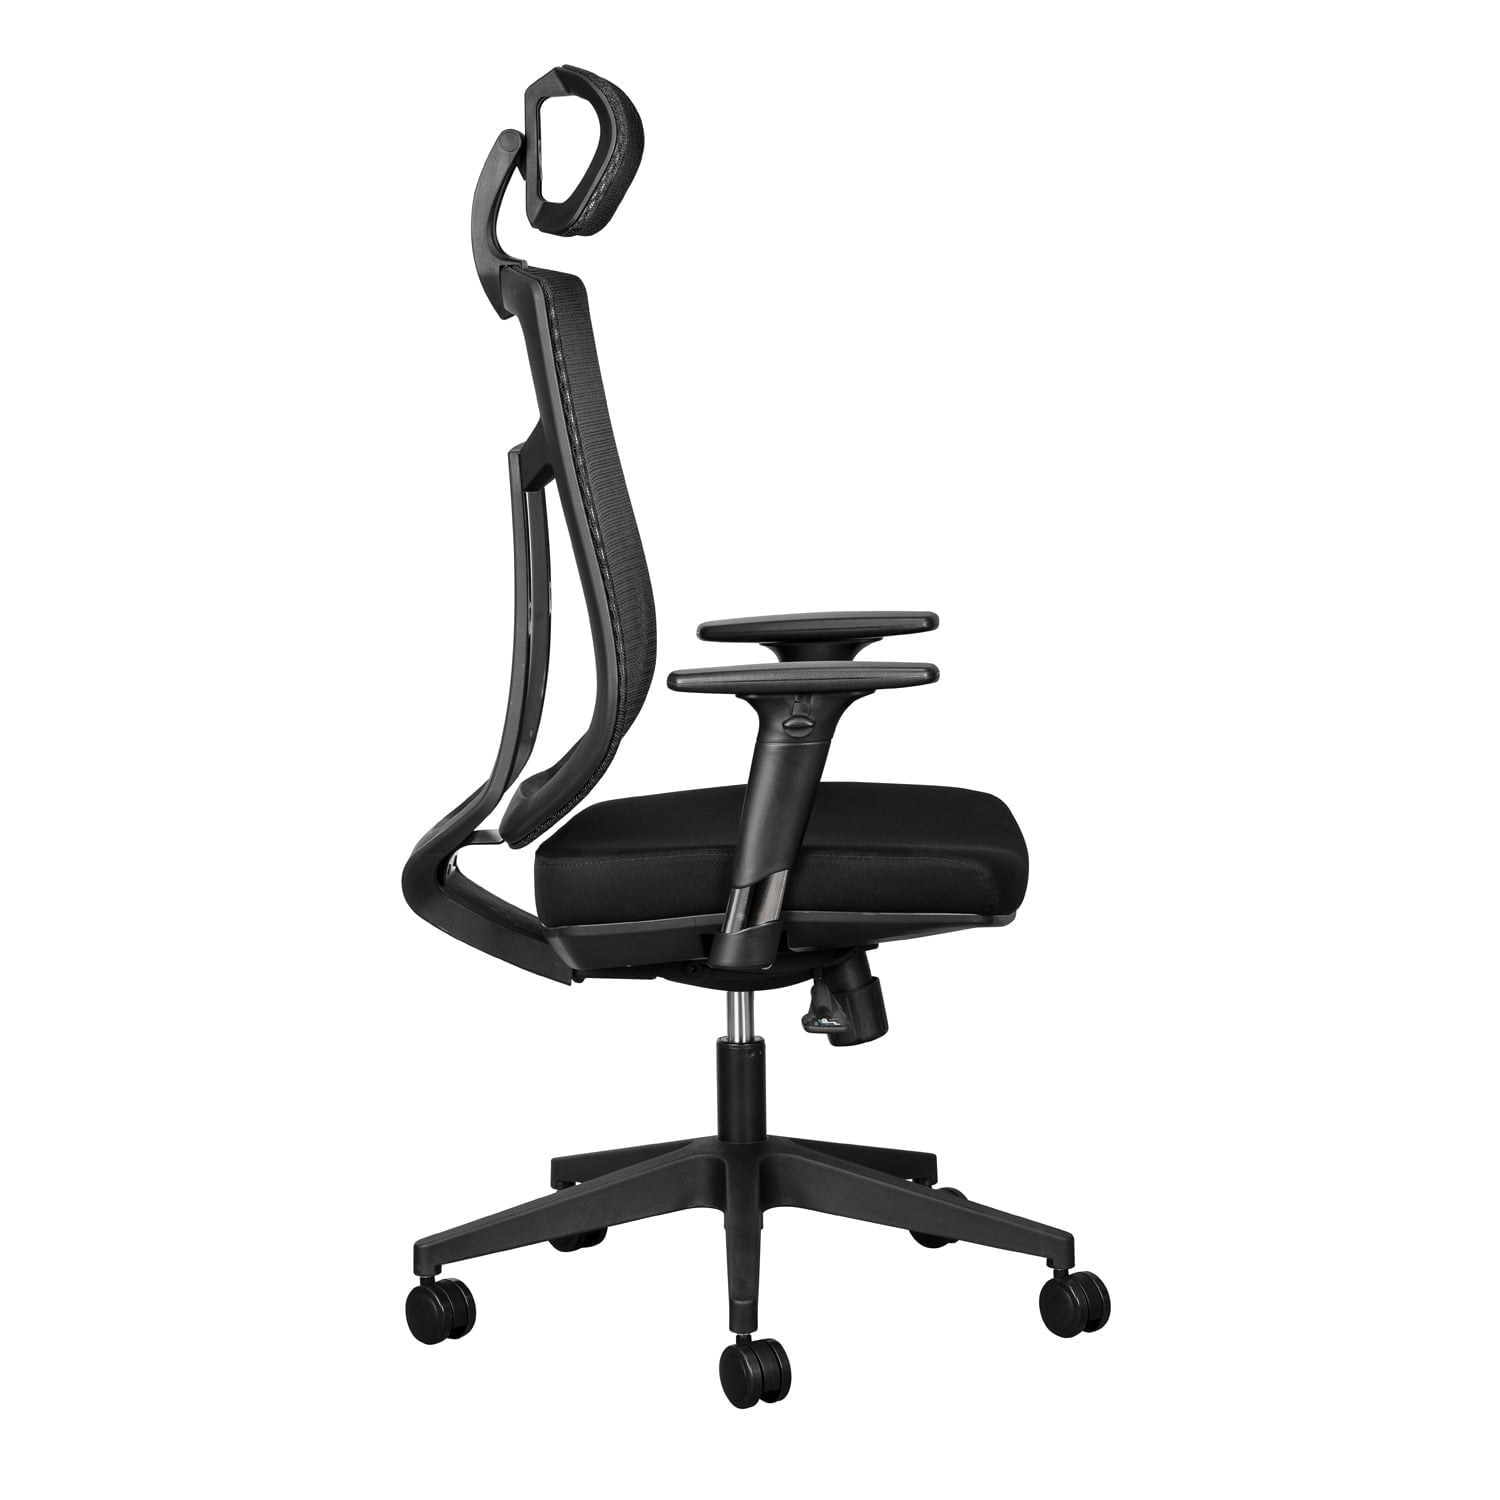 ergosit ergonomic office chair with headrest